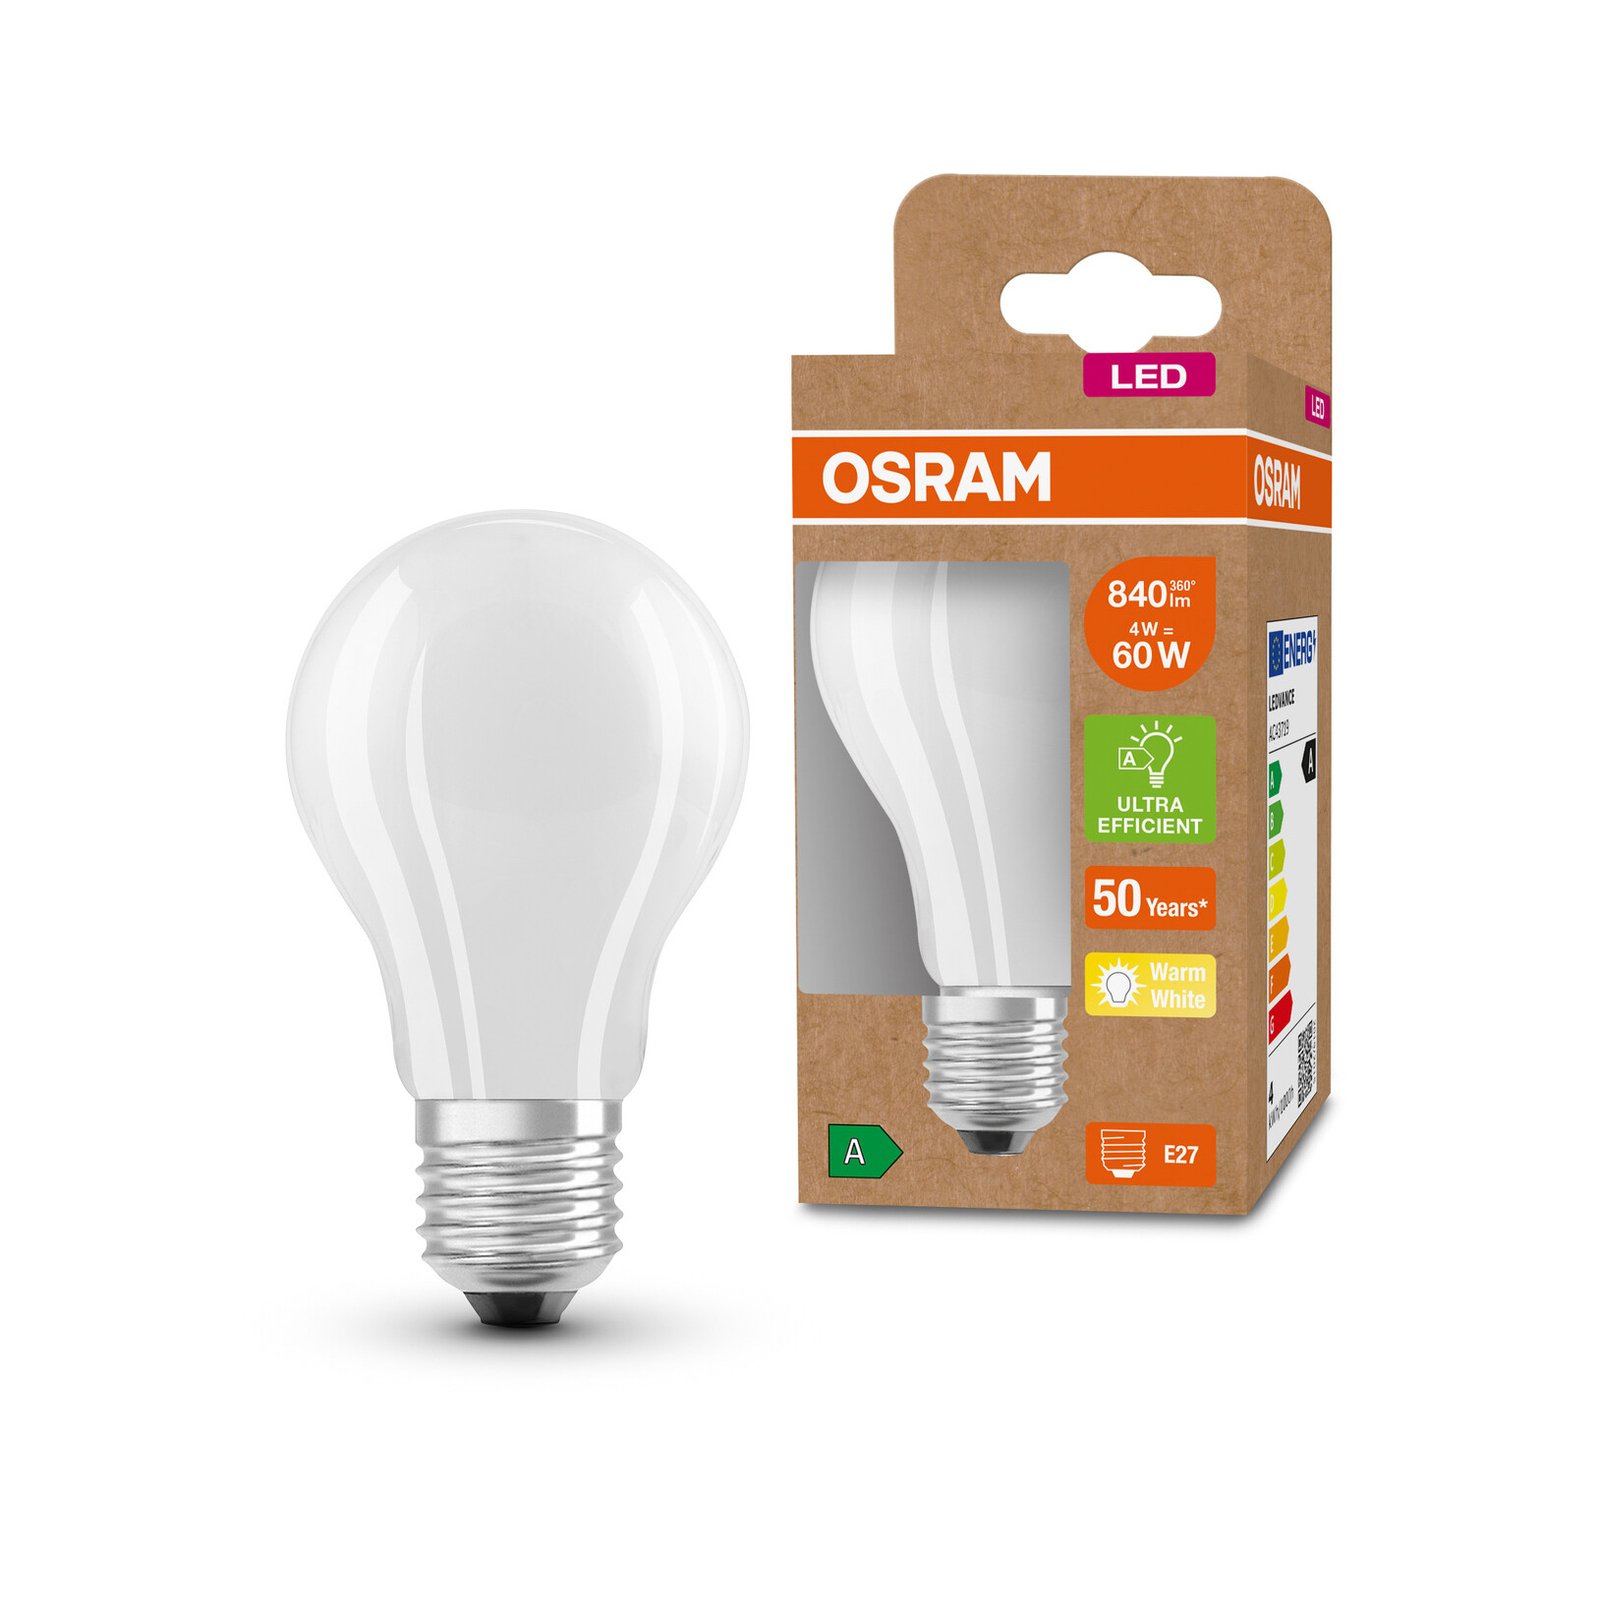 OSRAM LED lámpa E27 A60 3.8W 840lm 3,000K matt